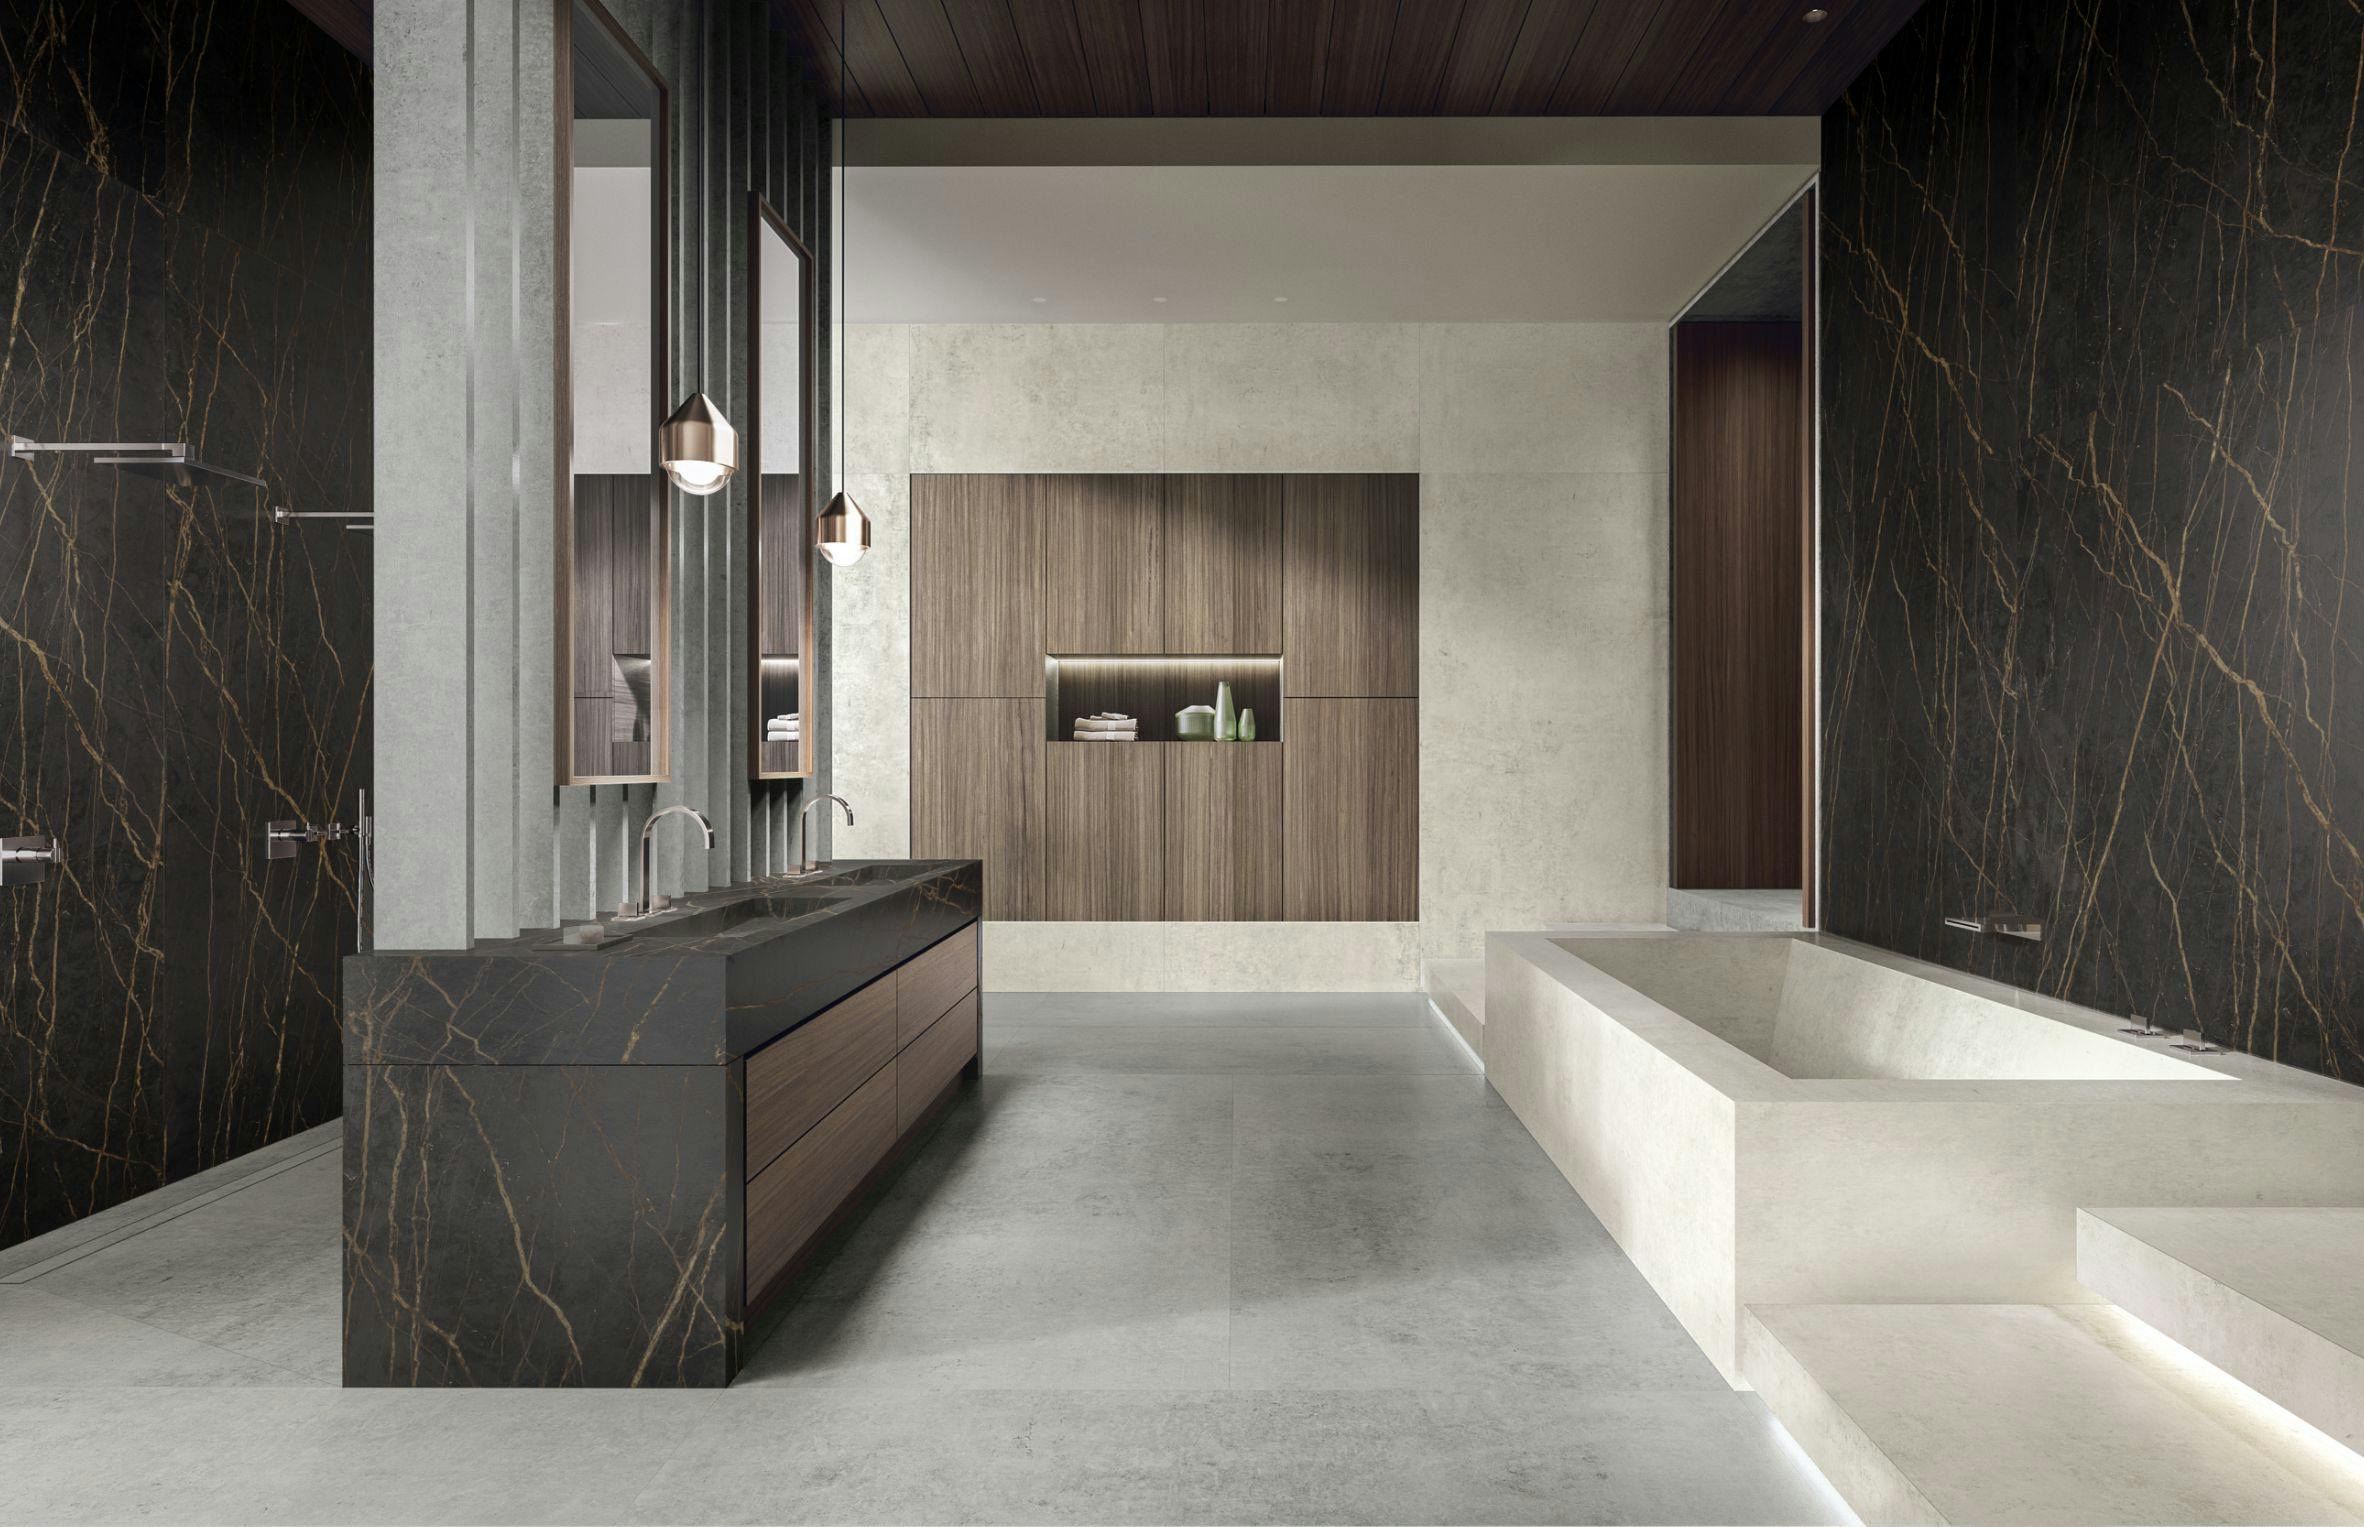 Imagen número 82 de 'Space for two', a bathroom meticulously designed by Marisa Gallo